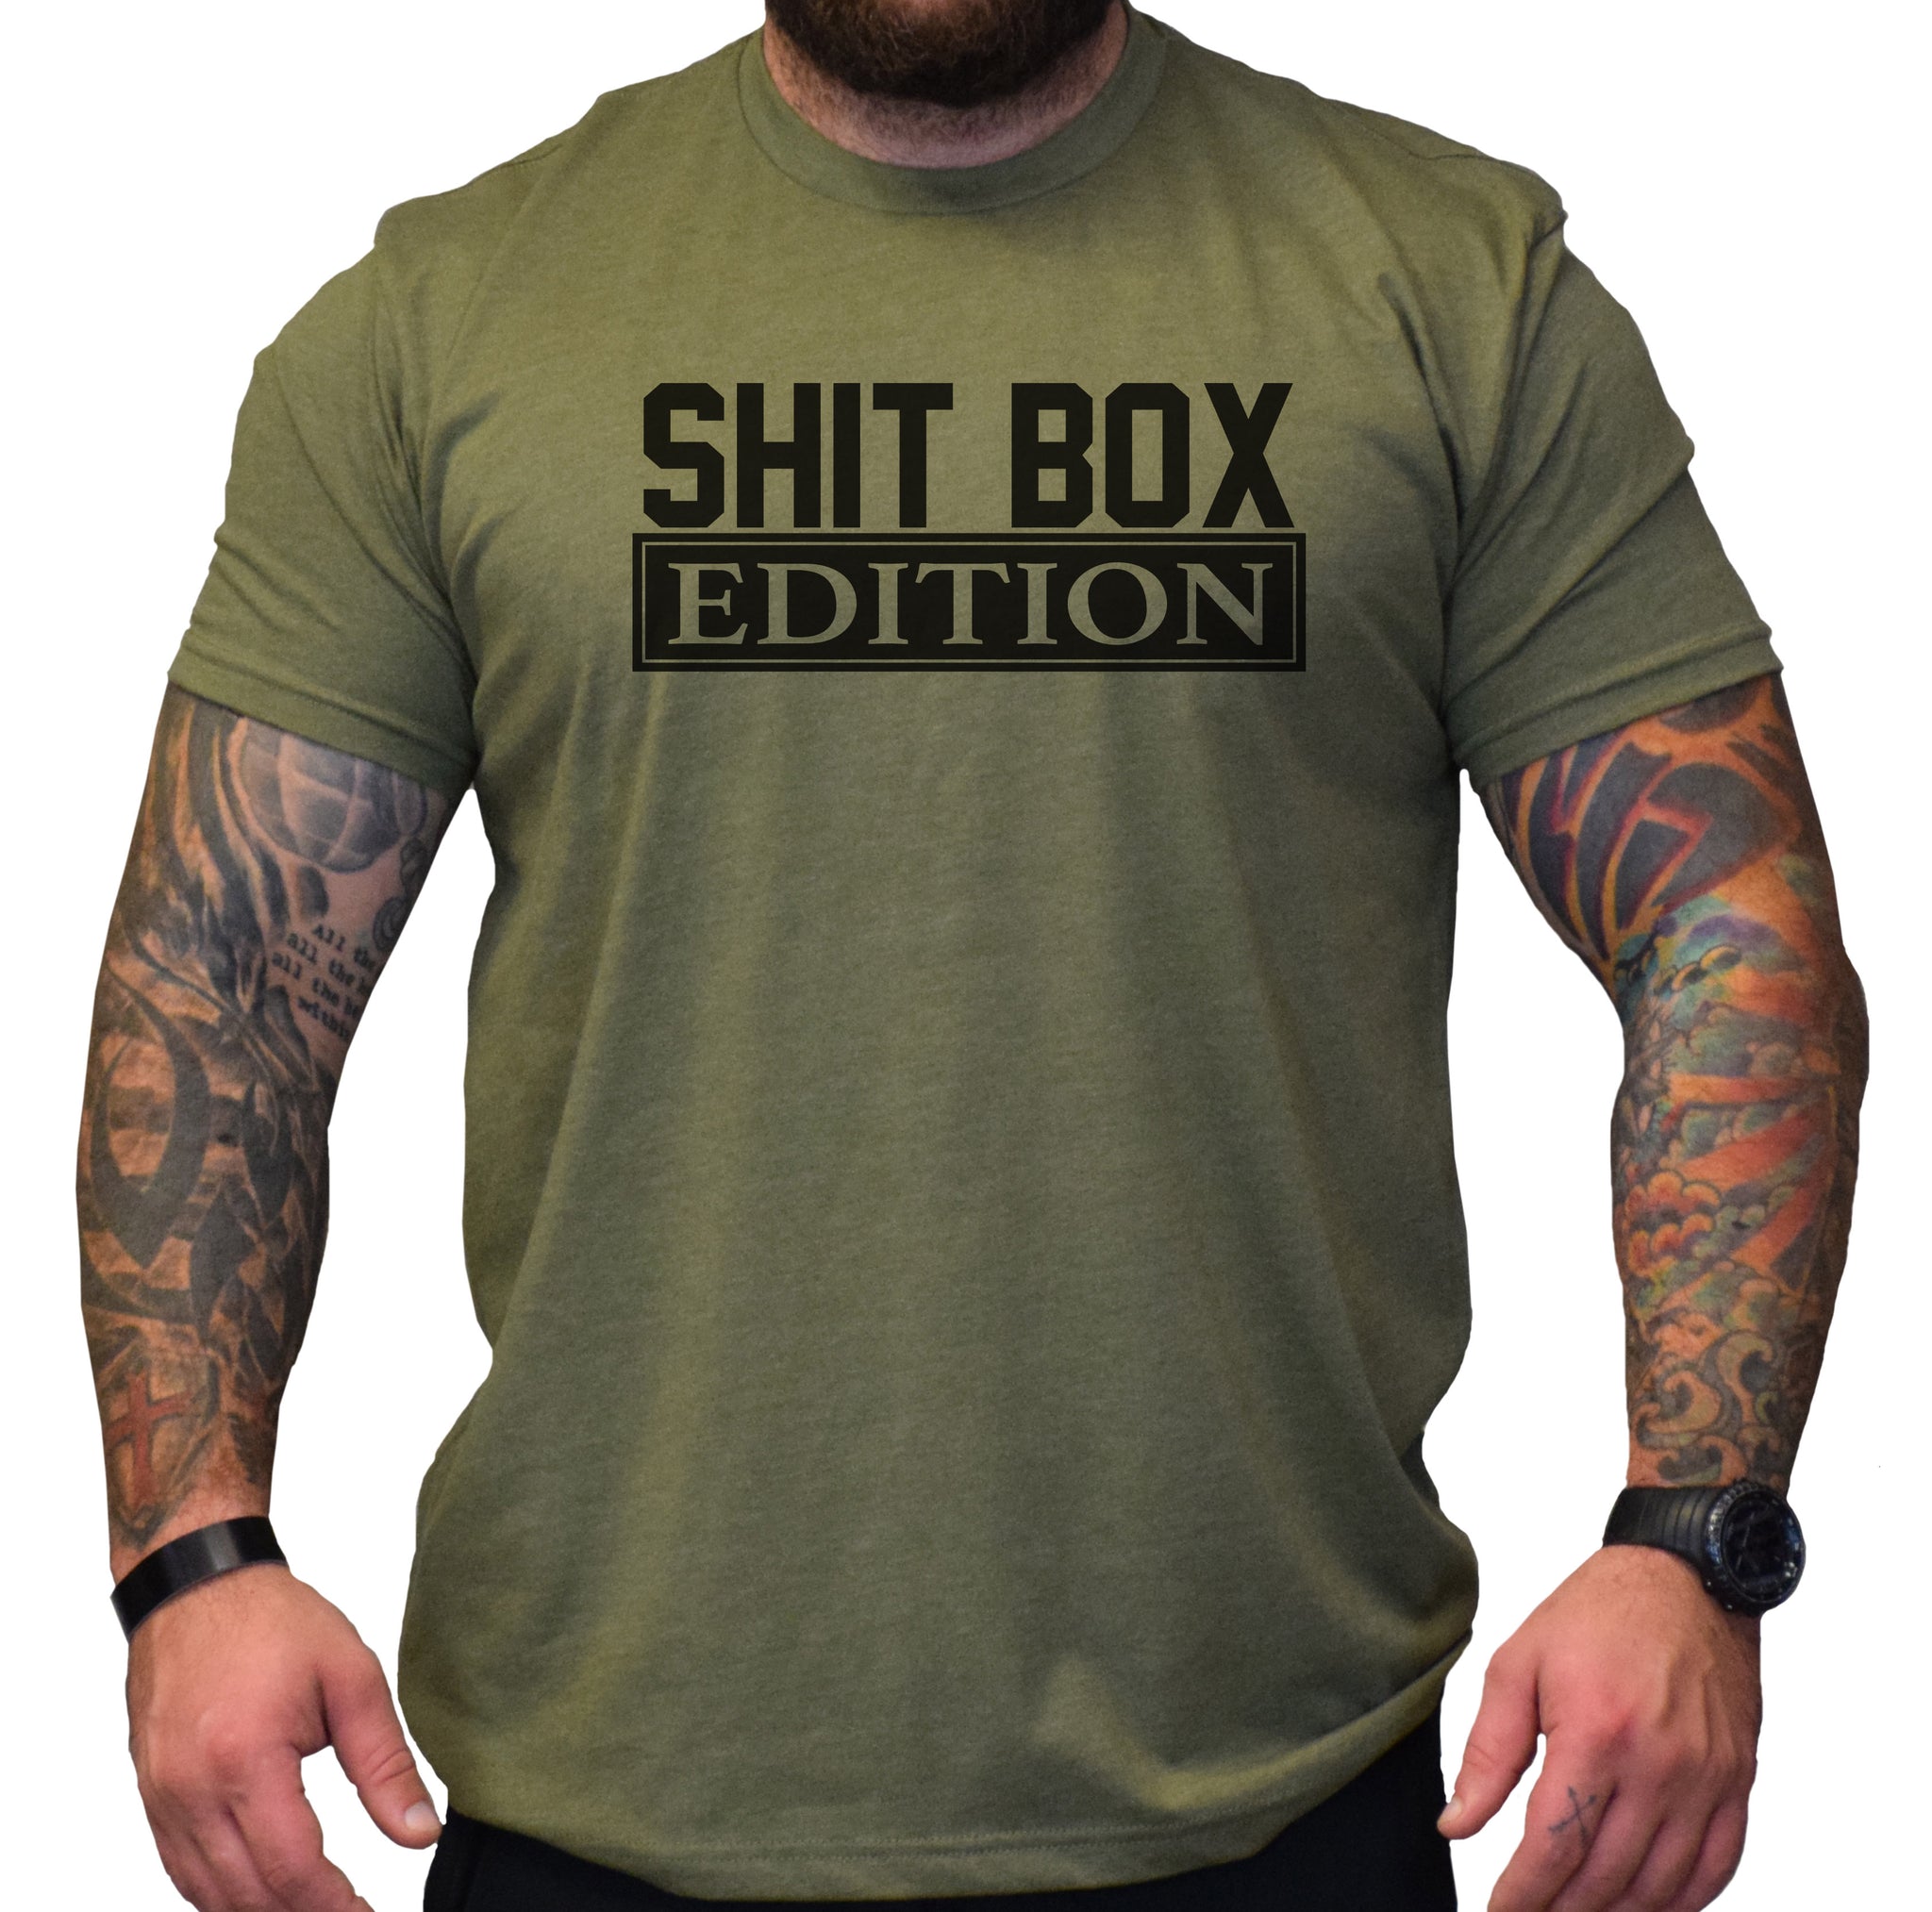 Shit Box Chevy Edition